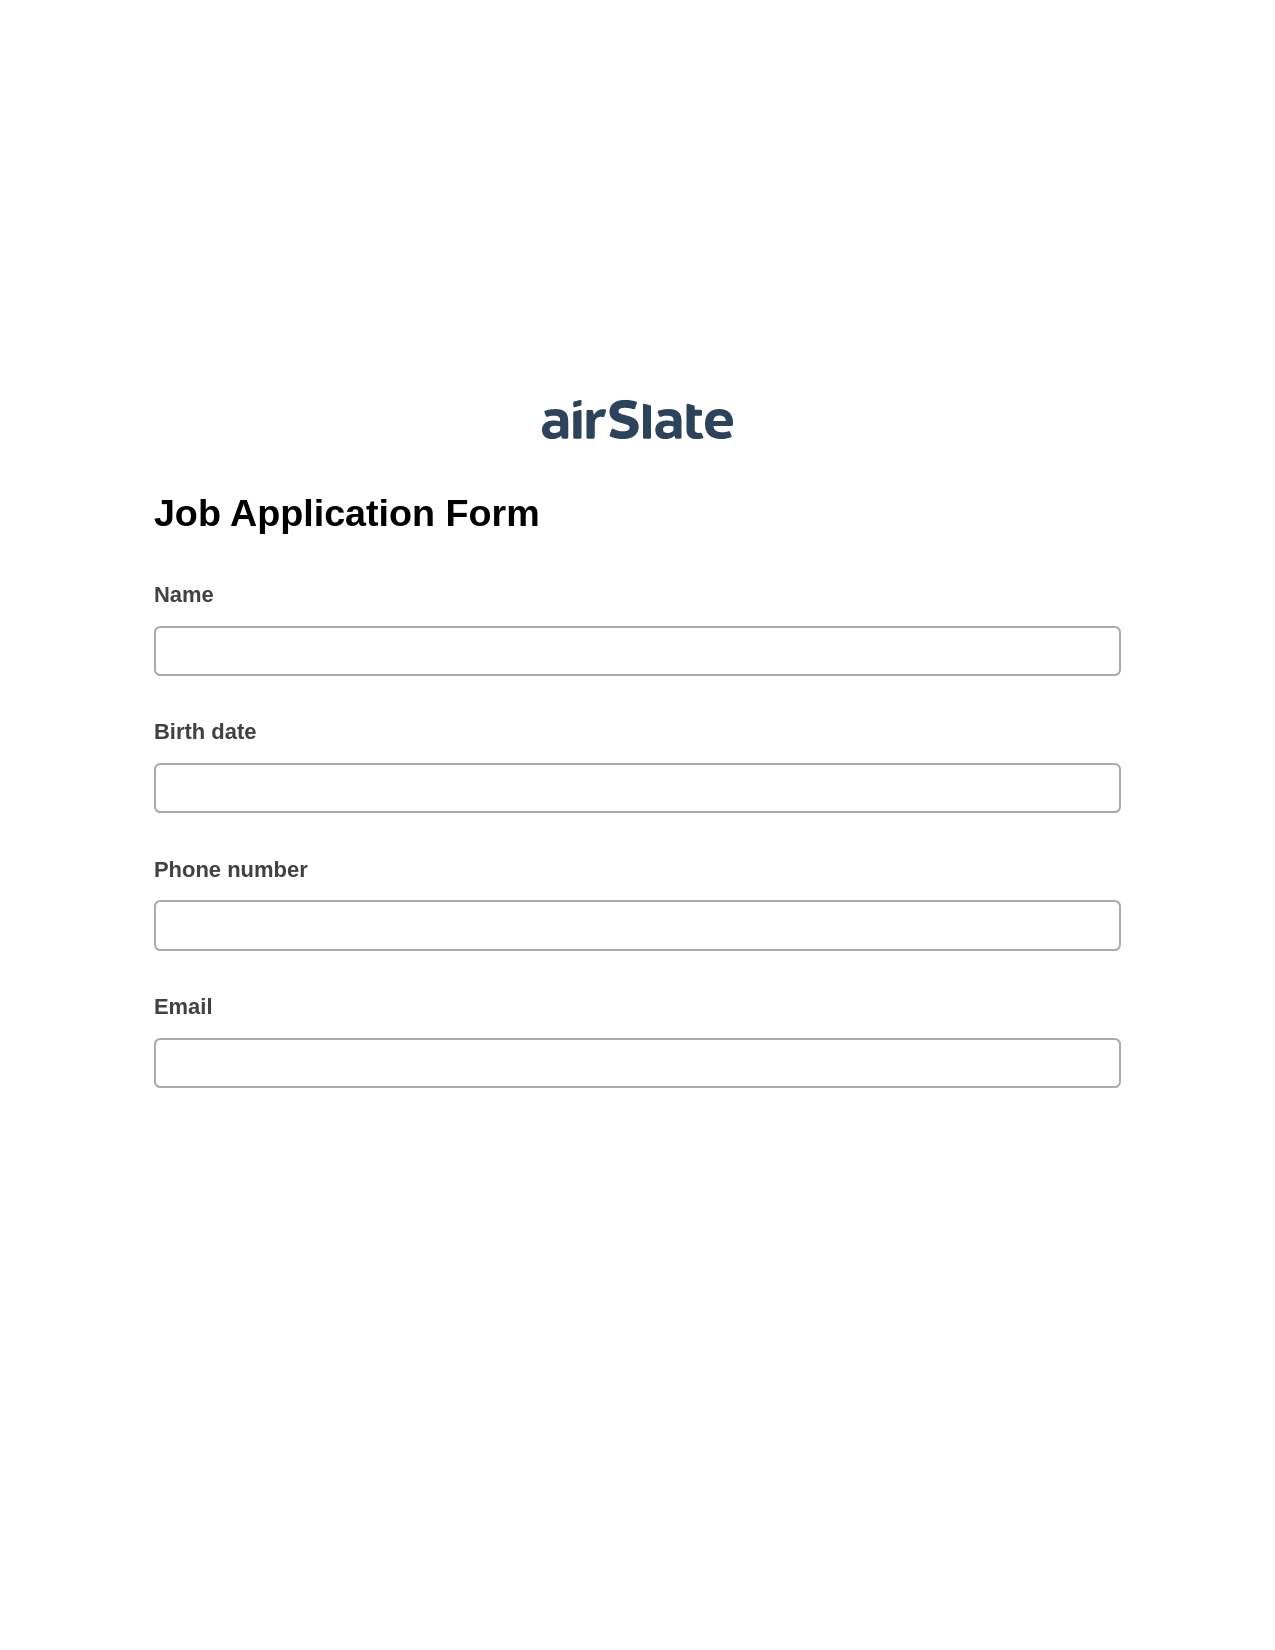 Multirole Job Application Form Pre-fill from MySQL Bot, Jira Bot, Post-finish Document Bot